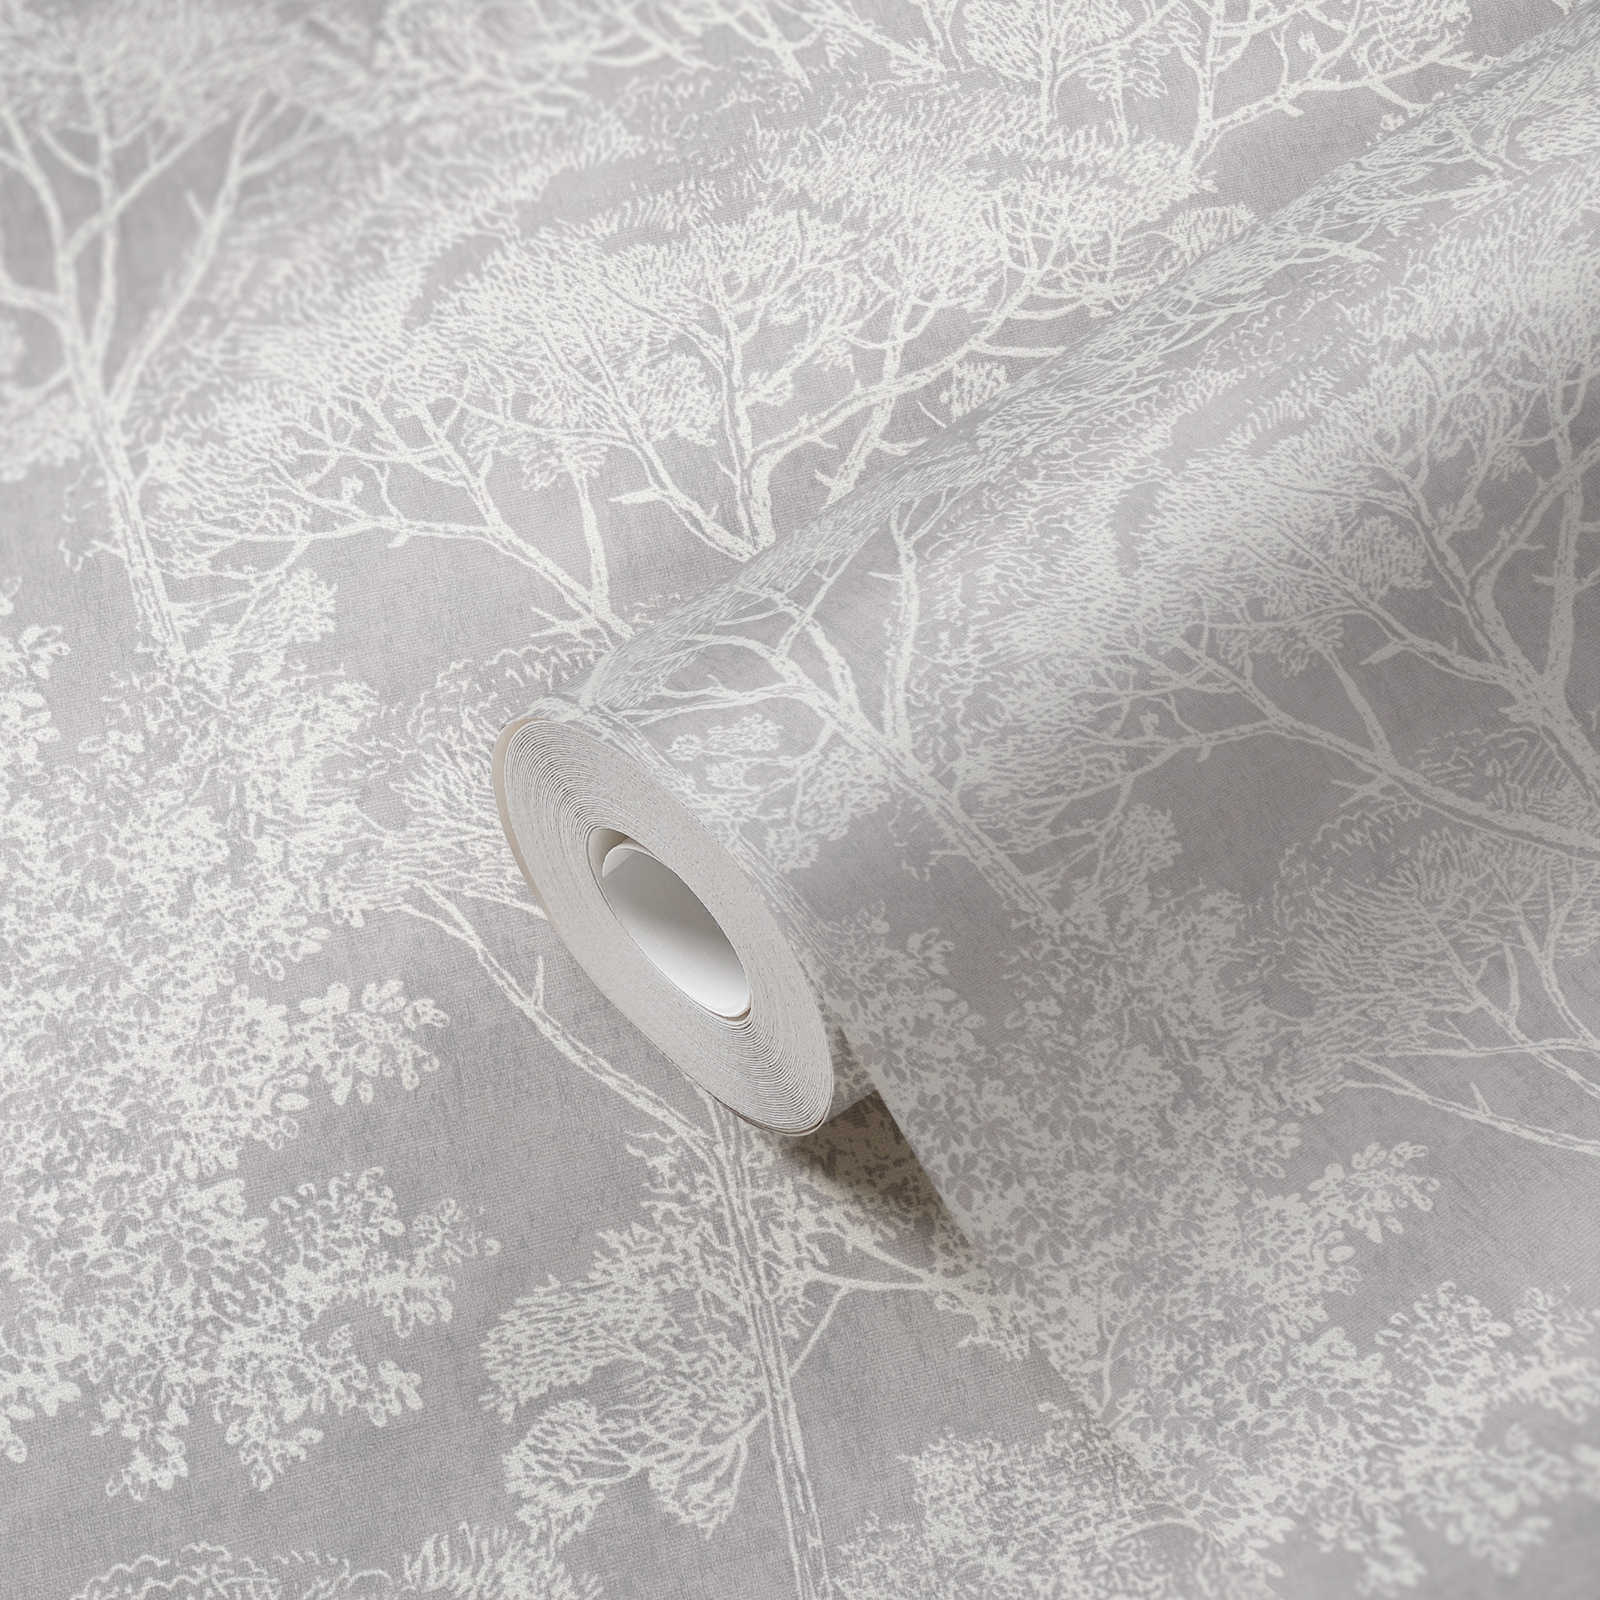             Vintage non-woven wallpaper tree motif with metallic effect - cream, grey, metallic
        